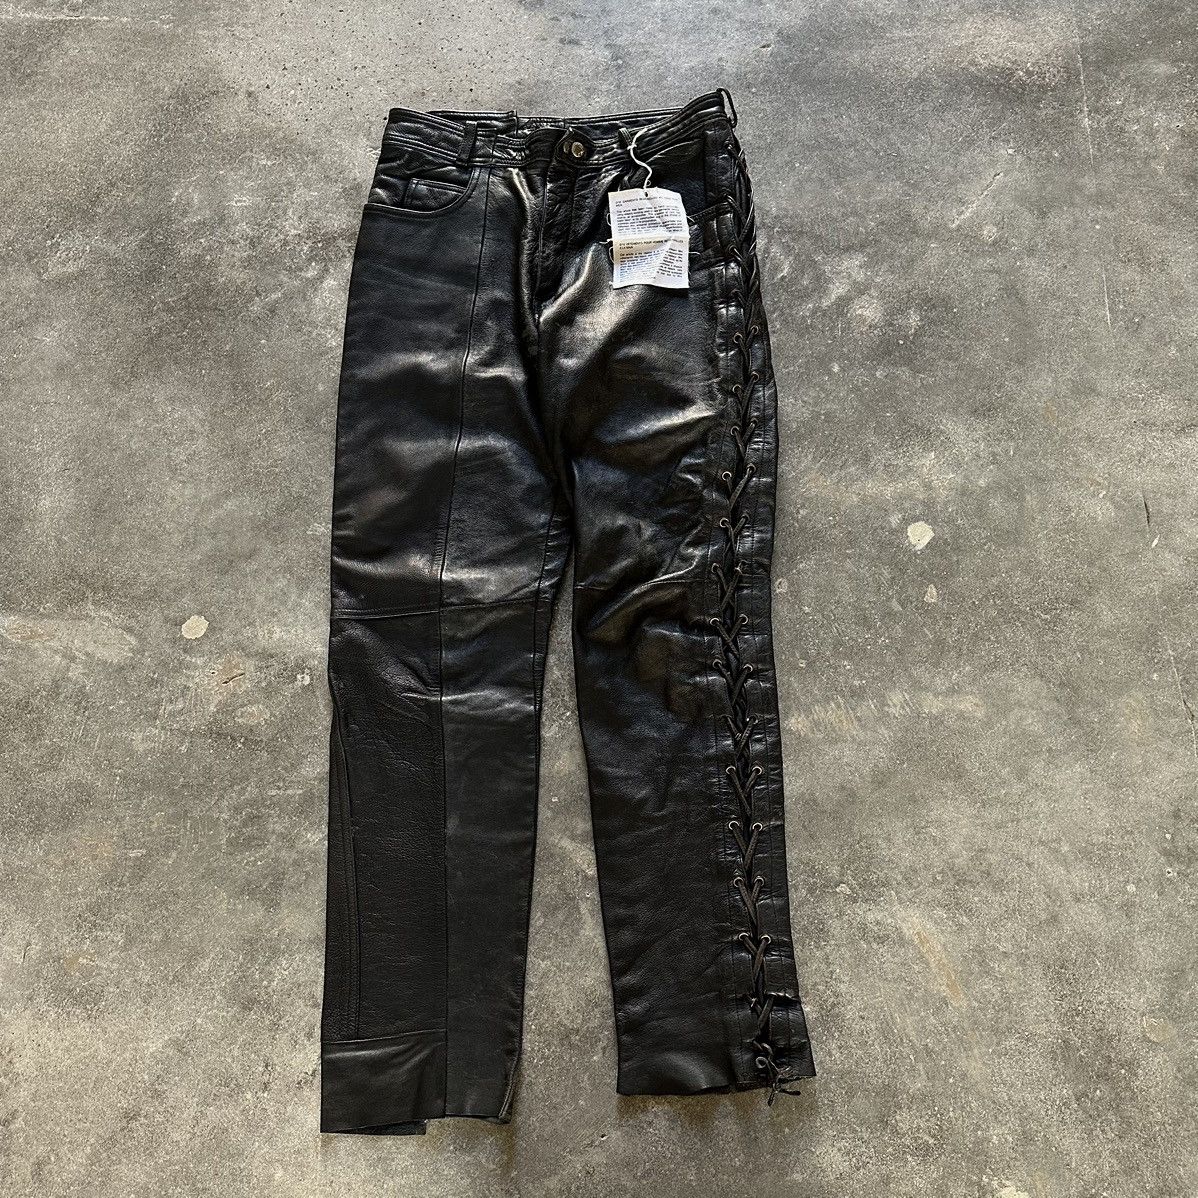 Maison Margiela AW04 Artisanal 010 Reconstructed Leather Pants | Grailed